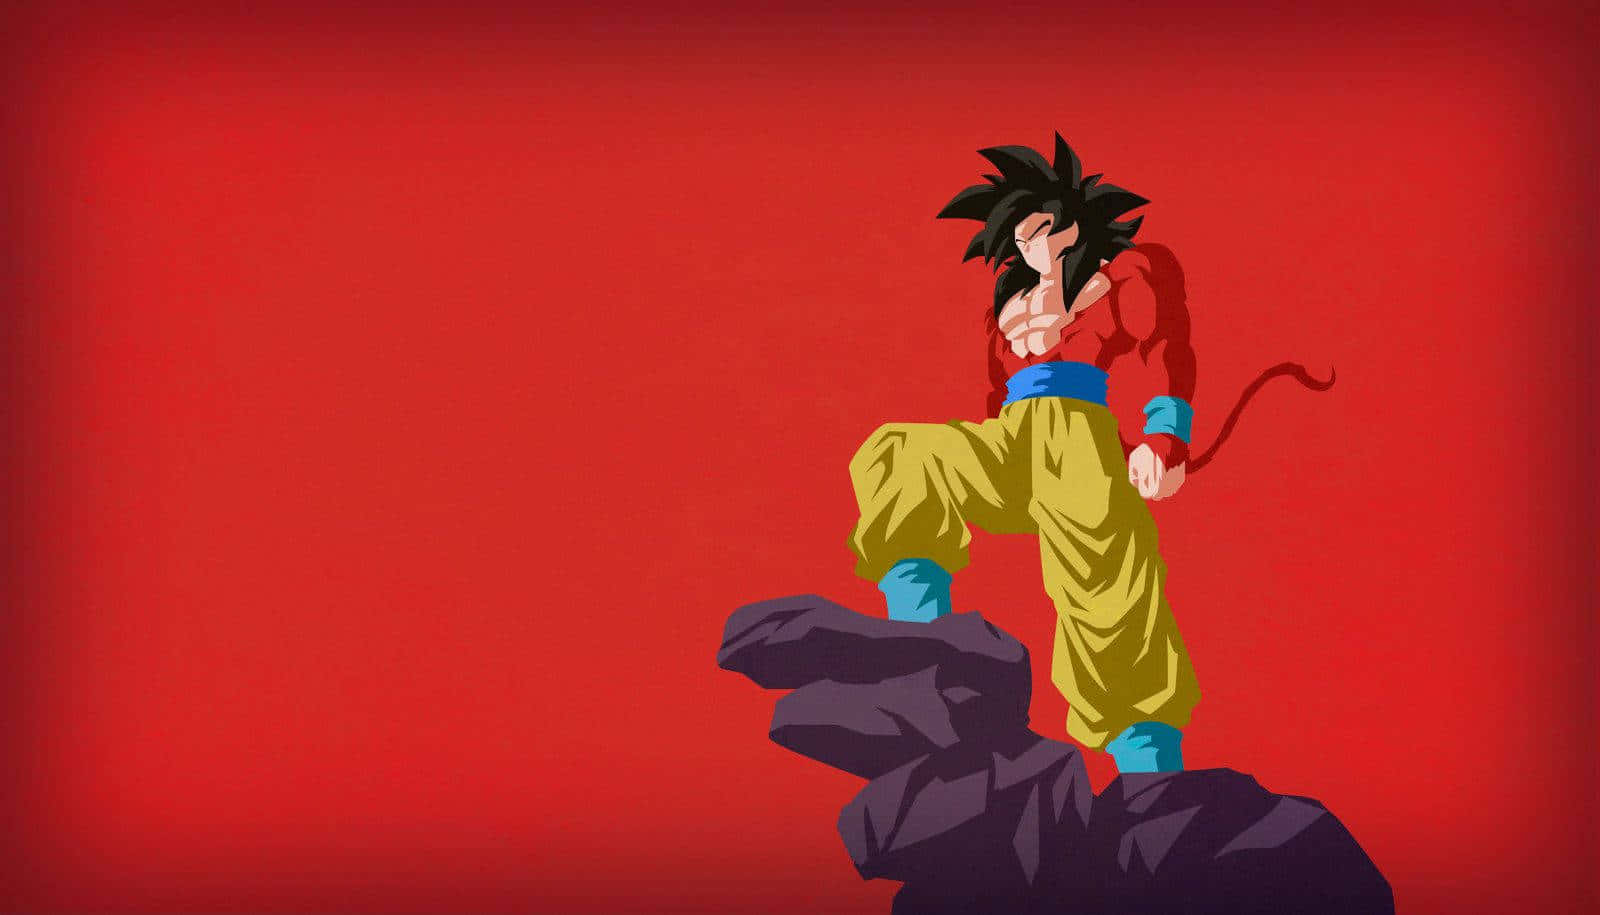 Goku Super Saiyan 4, Defeating his Strongest Foes. Wallpaper